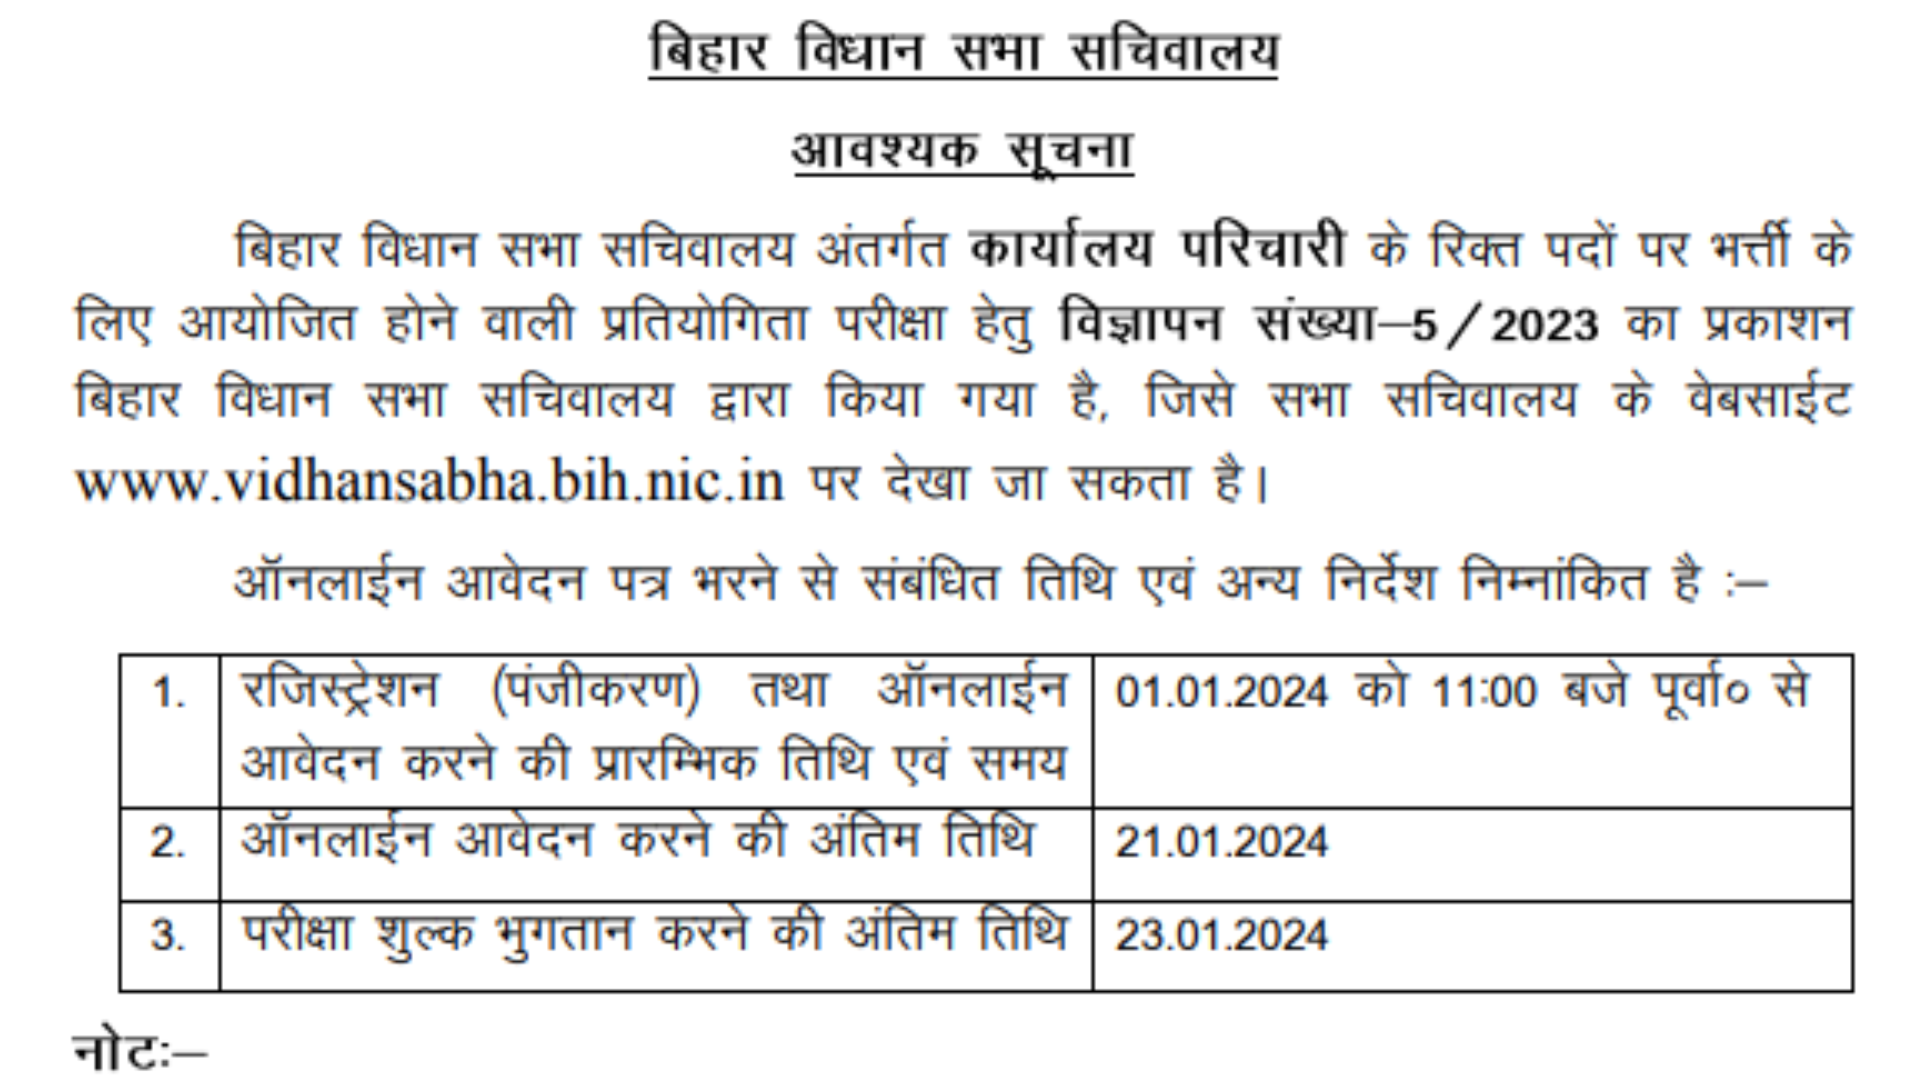 Bihar Vidhan Sabha Recruitment 2024 Notification and Online Application Form